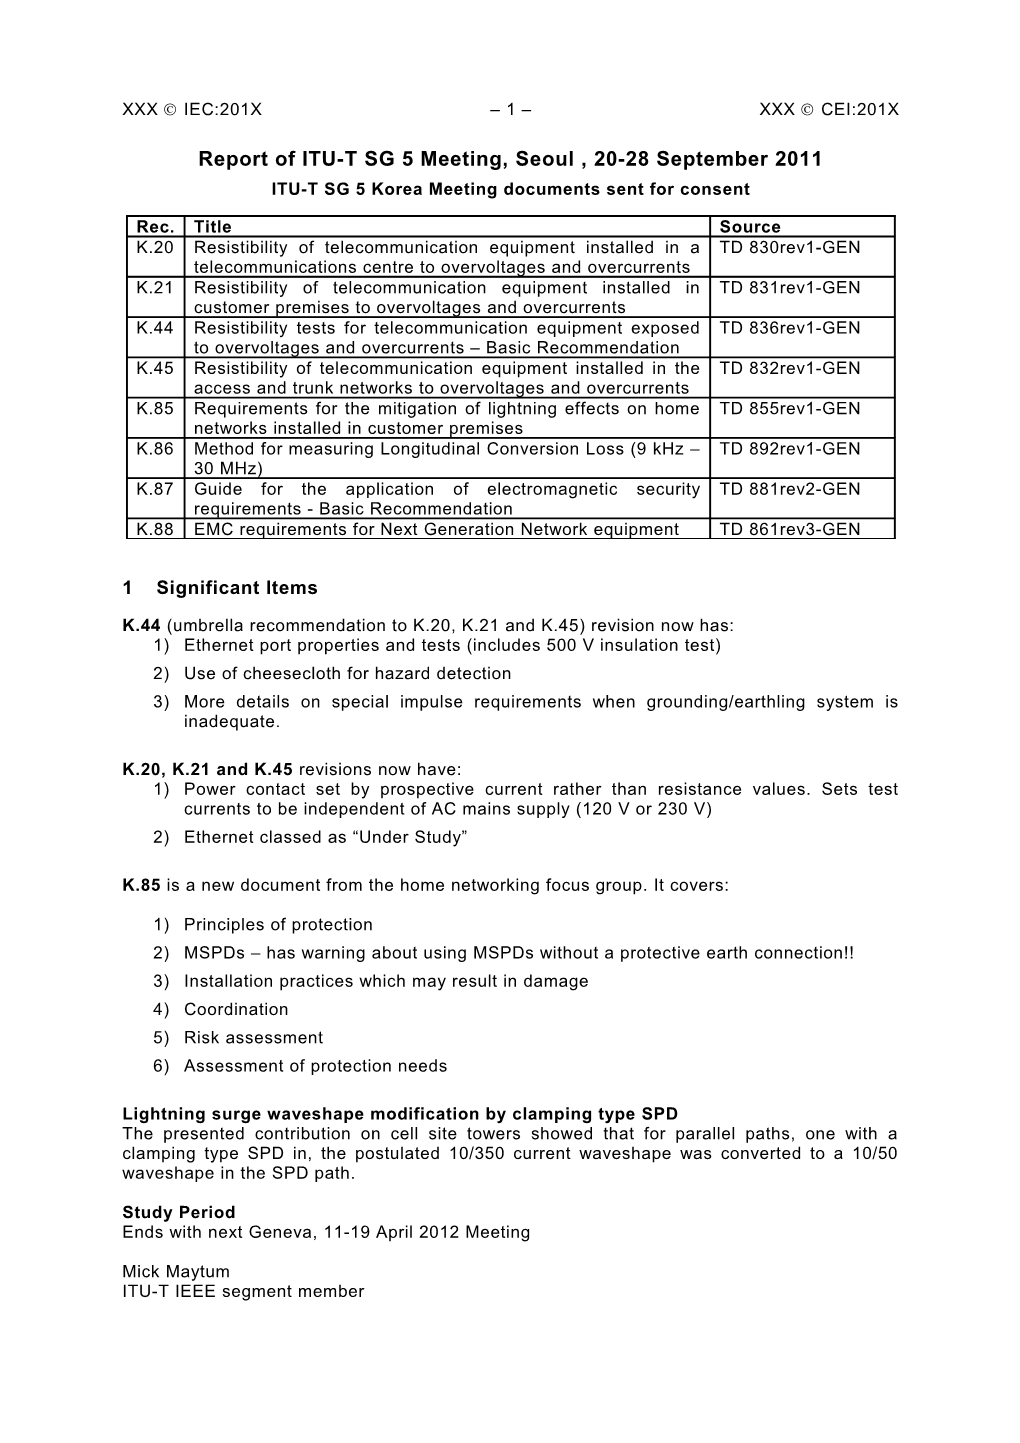 ITU-T SG 5 Korea Meeting Documents Sent for Consent